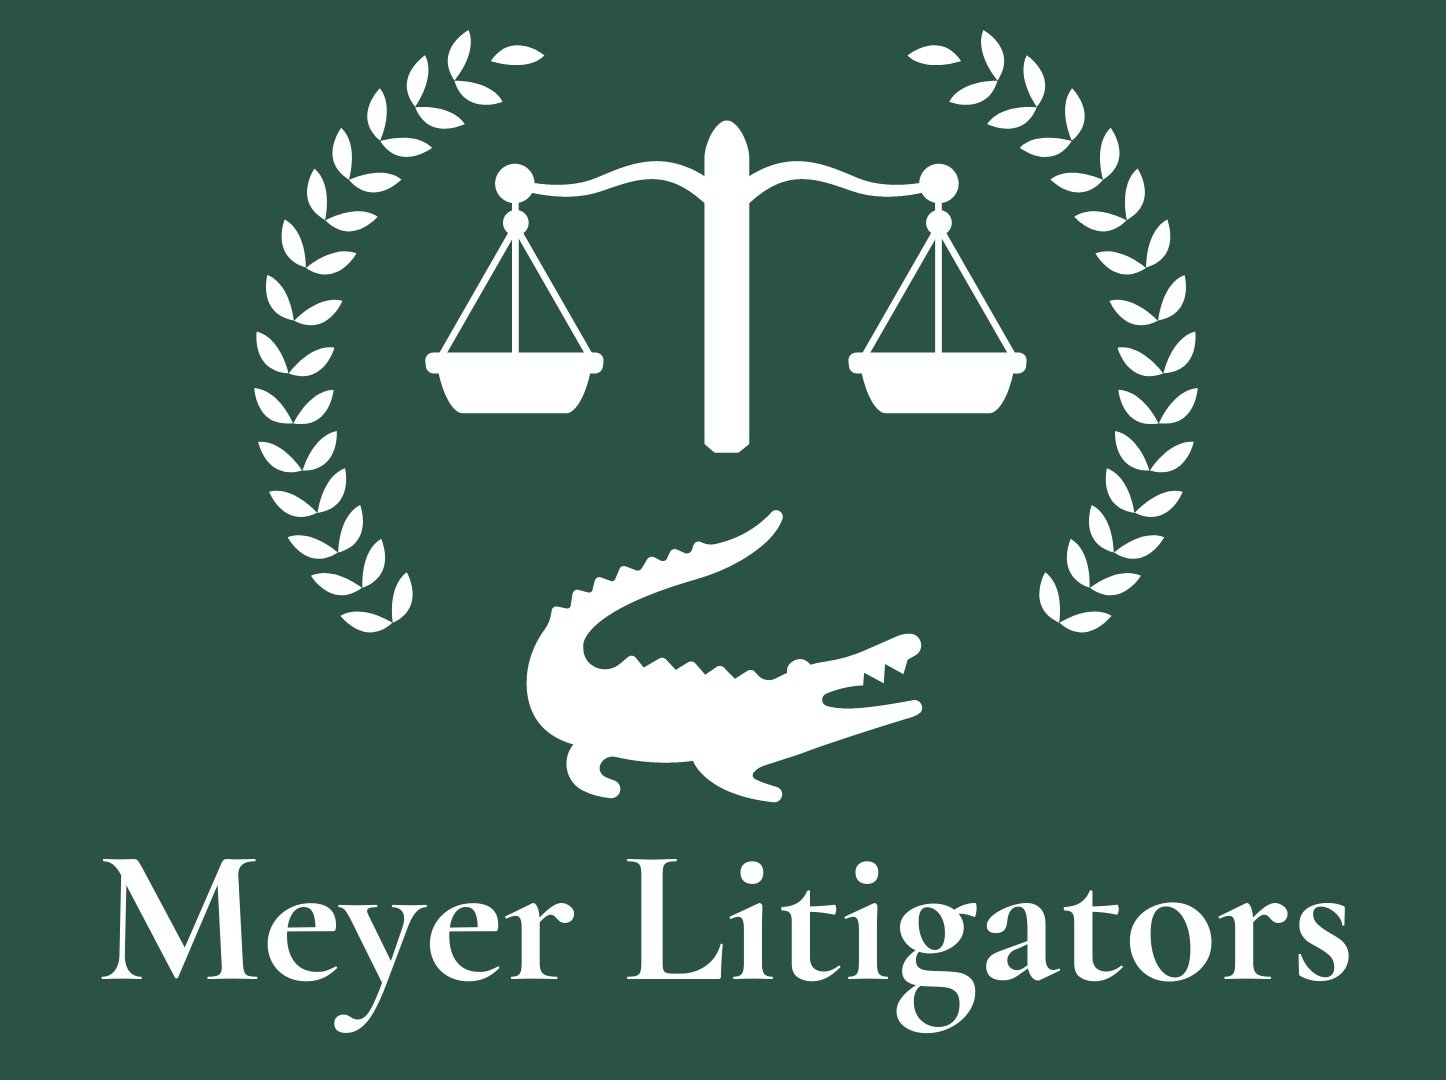 Meyer Litigators